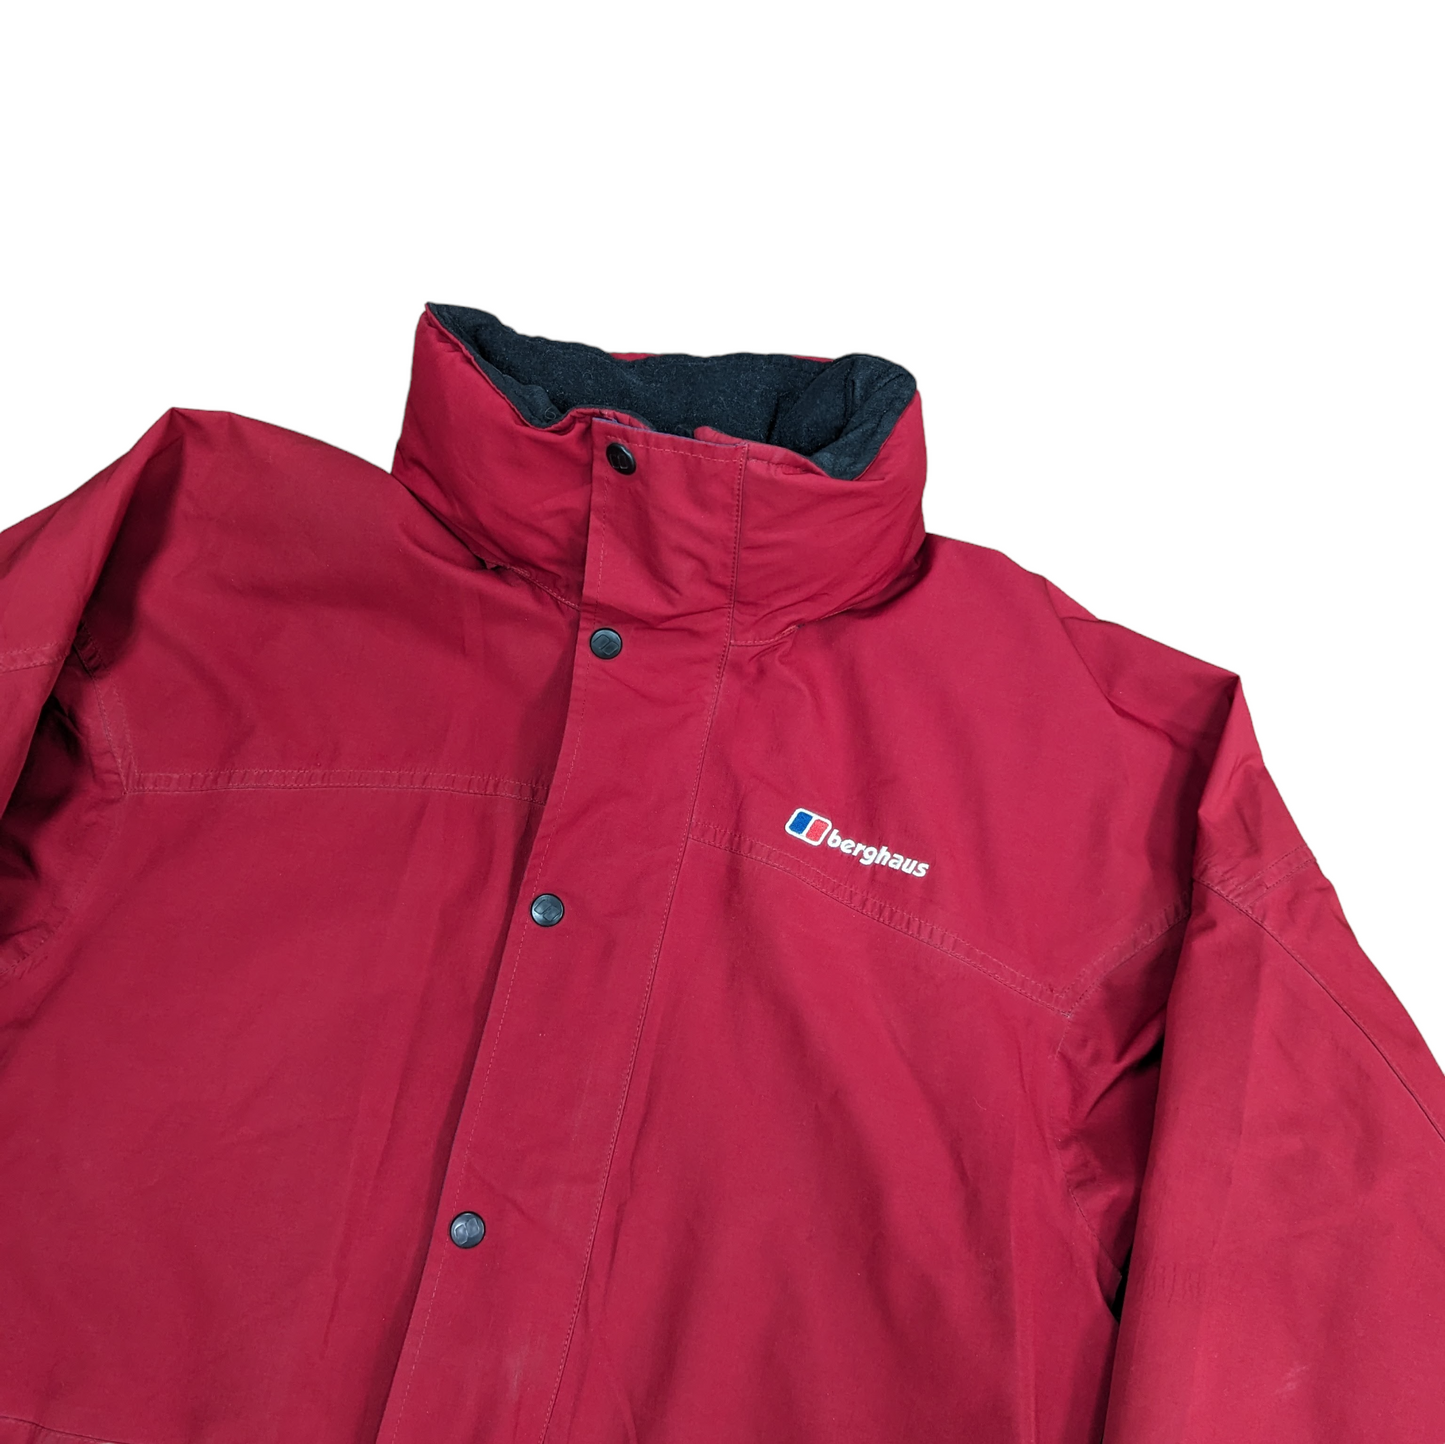 Berghaus Gore-Tex Raincoat Size S